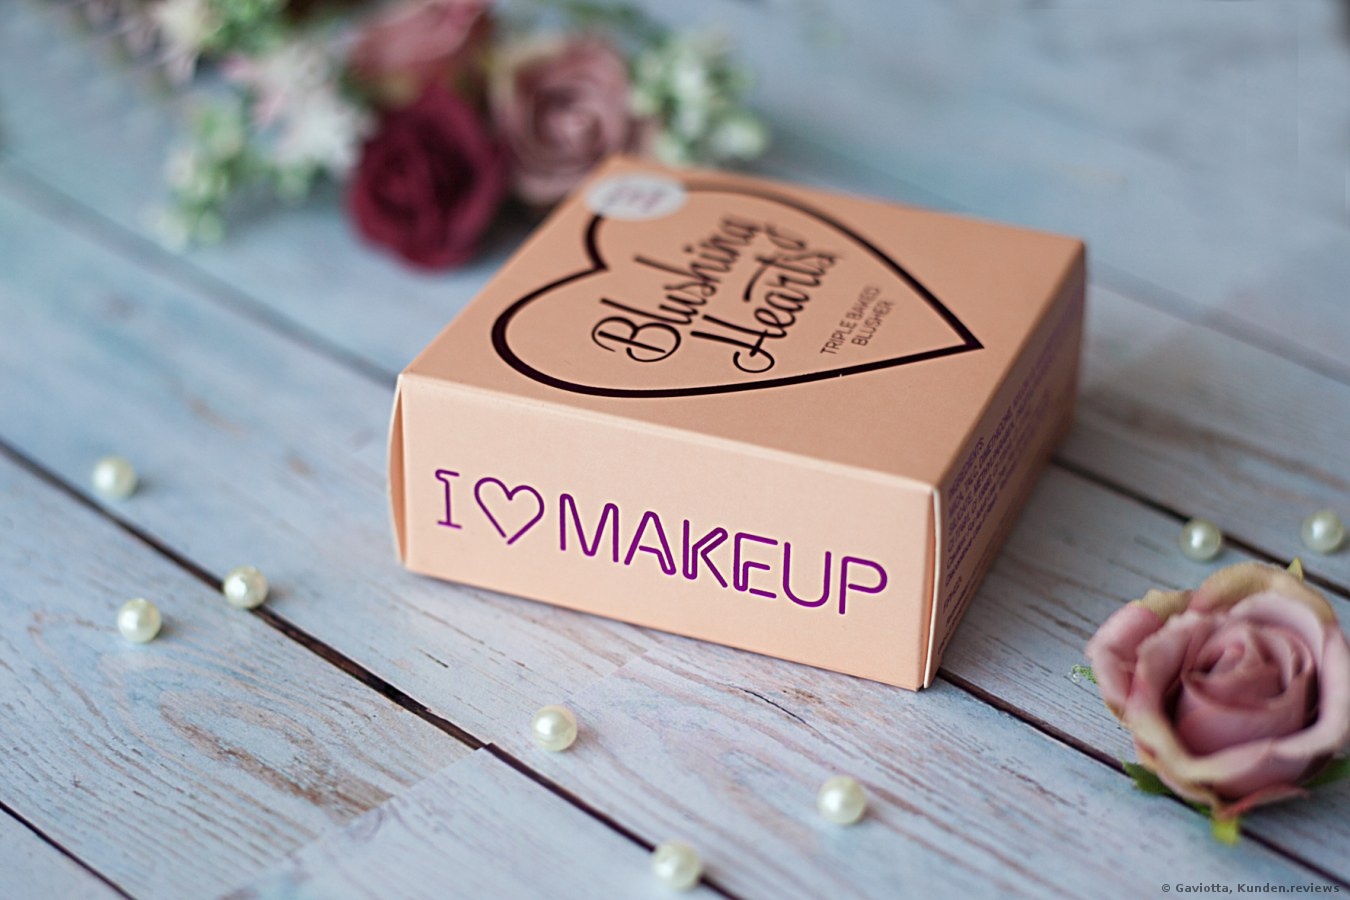 MakeUp Revolution  I ♡ Makeup - Blushing Hearts Triple Baked Blusher Blush Foto